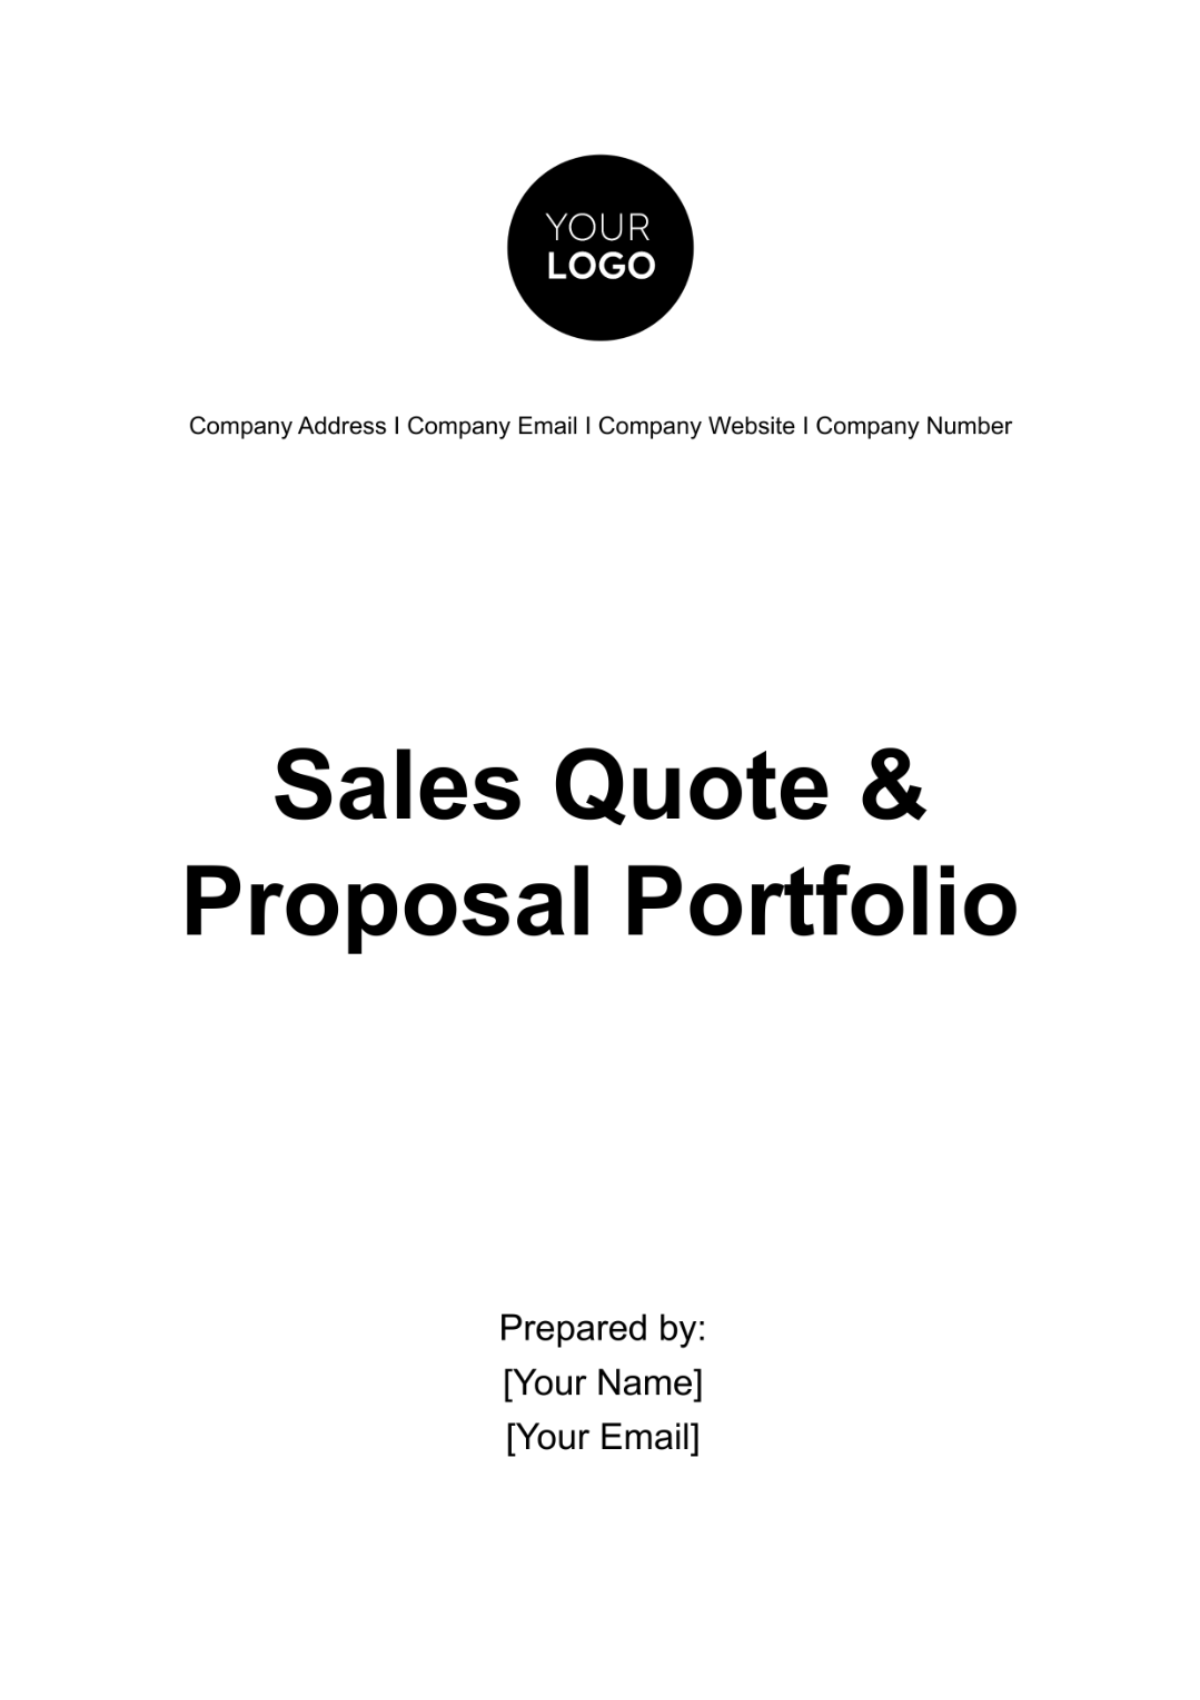 Sales Quote & Proposal Portfolio Template